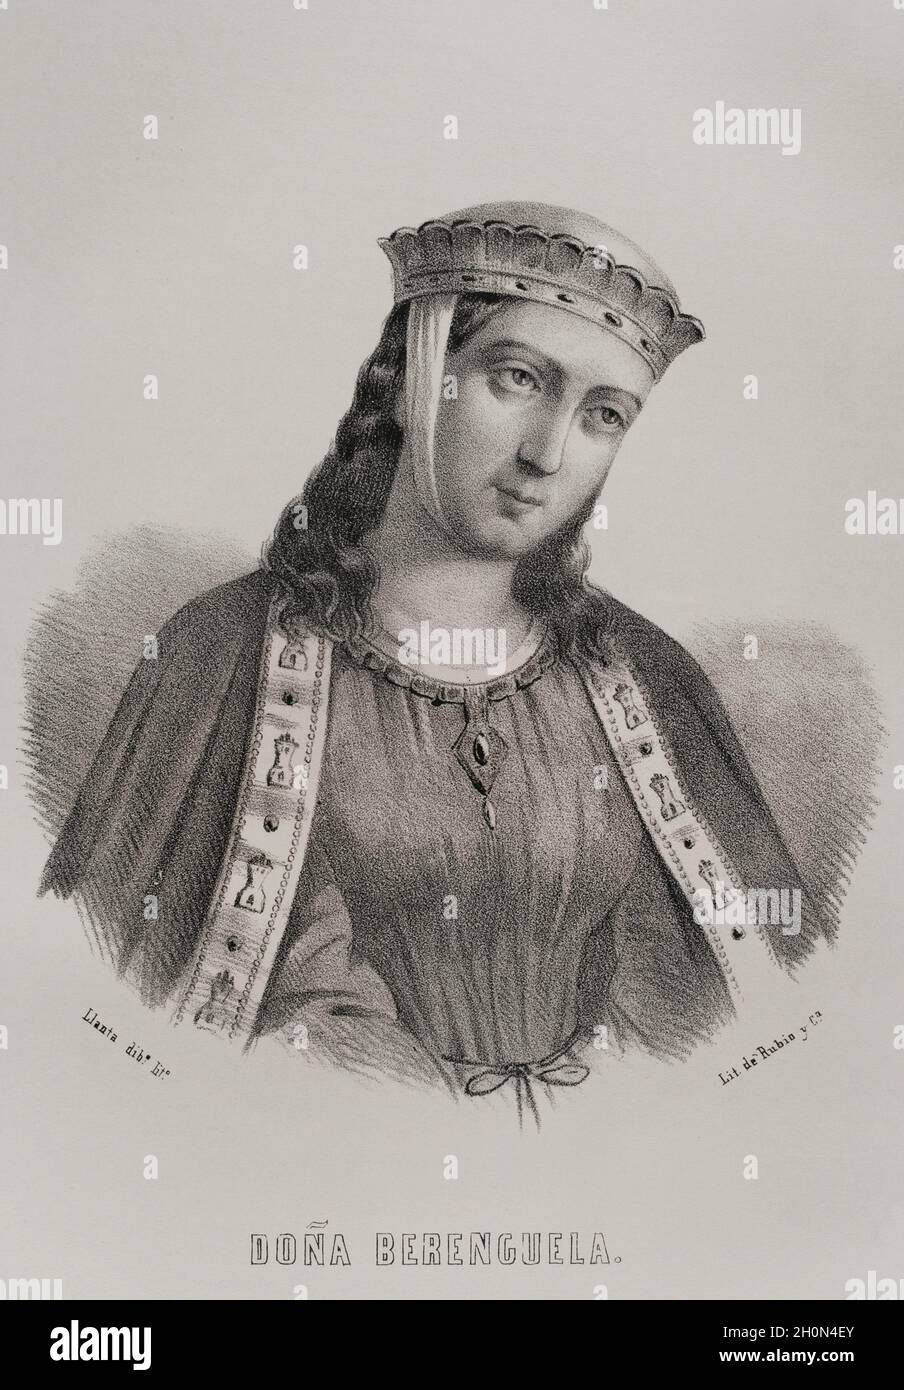 Berengaria (1180-1246). Queen of Castile and Queen consort of Leon. Portrait. Illustration by Llanta. Lithography. Cronica General de España. Historia Stock Photo